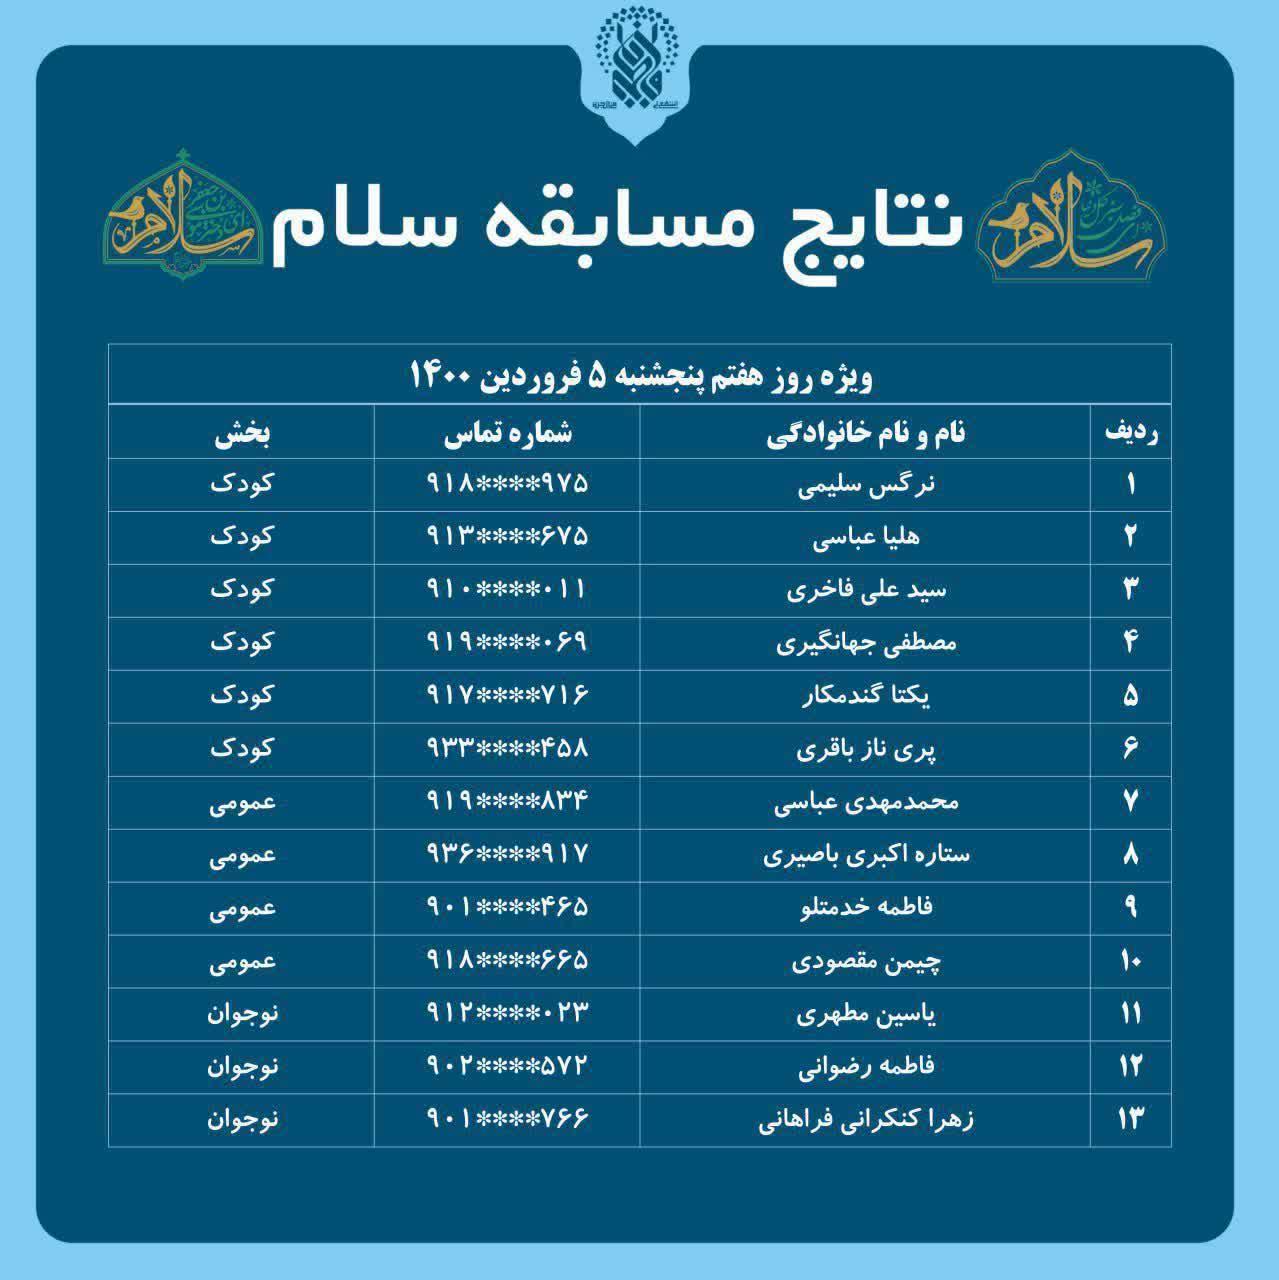 نتایج مسابقه روزانه سلام روز هفتم